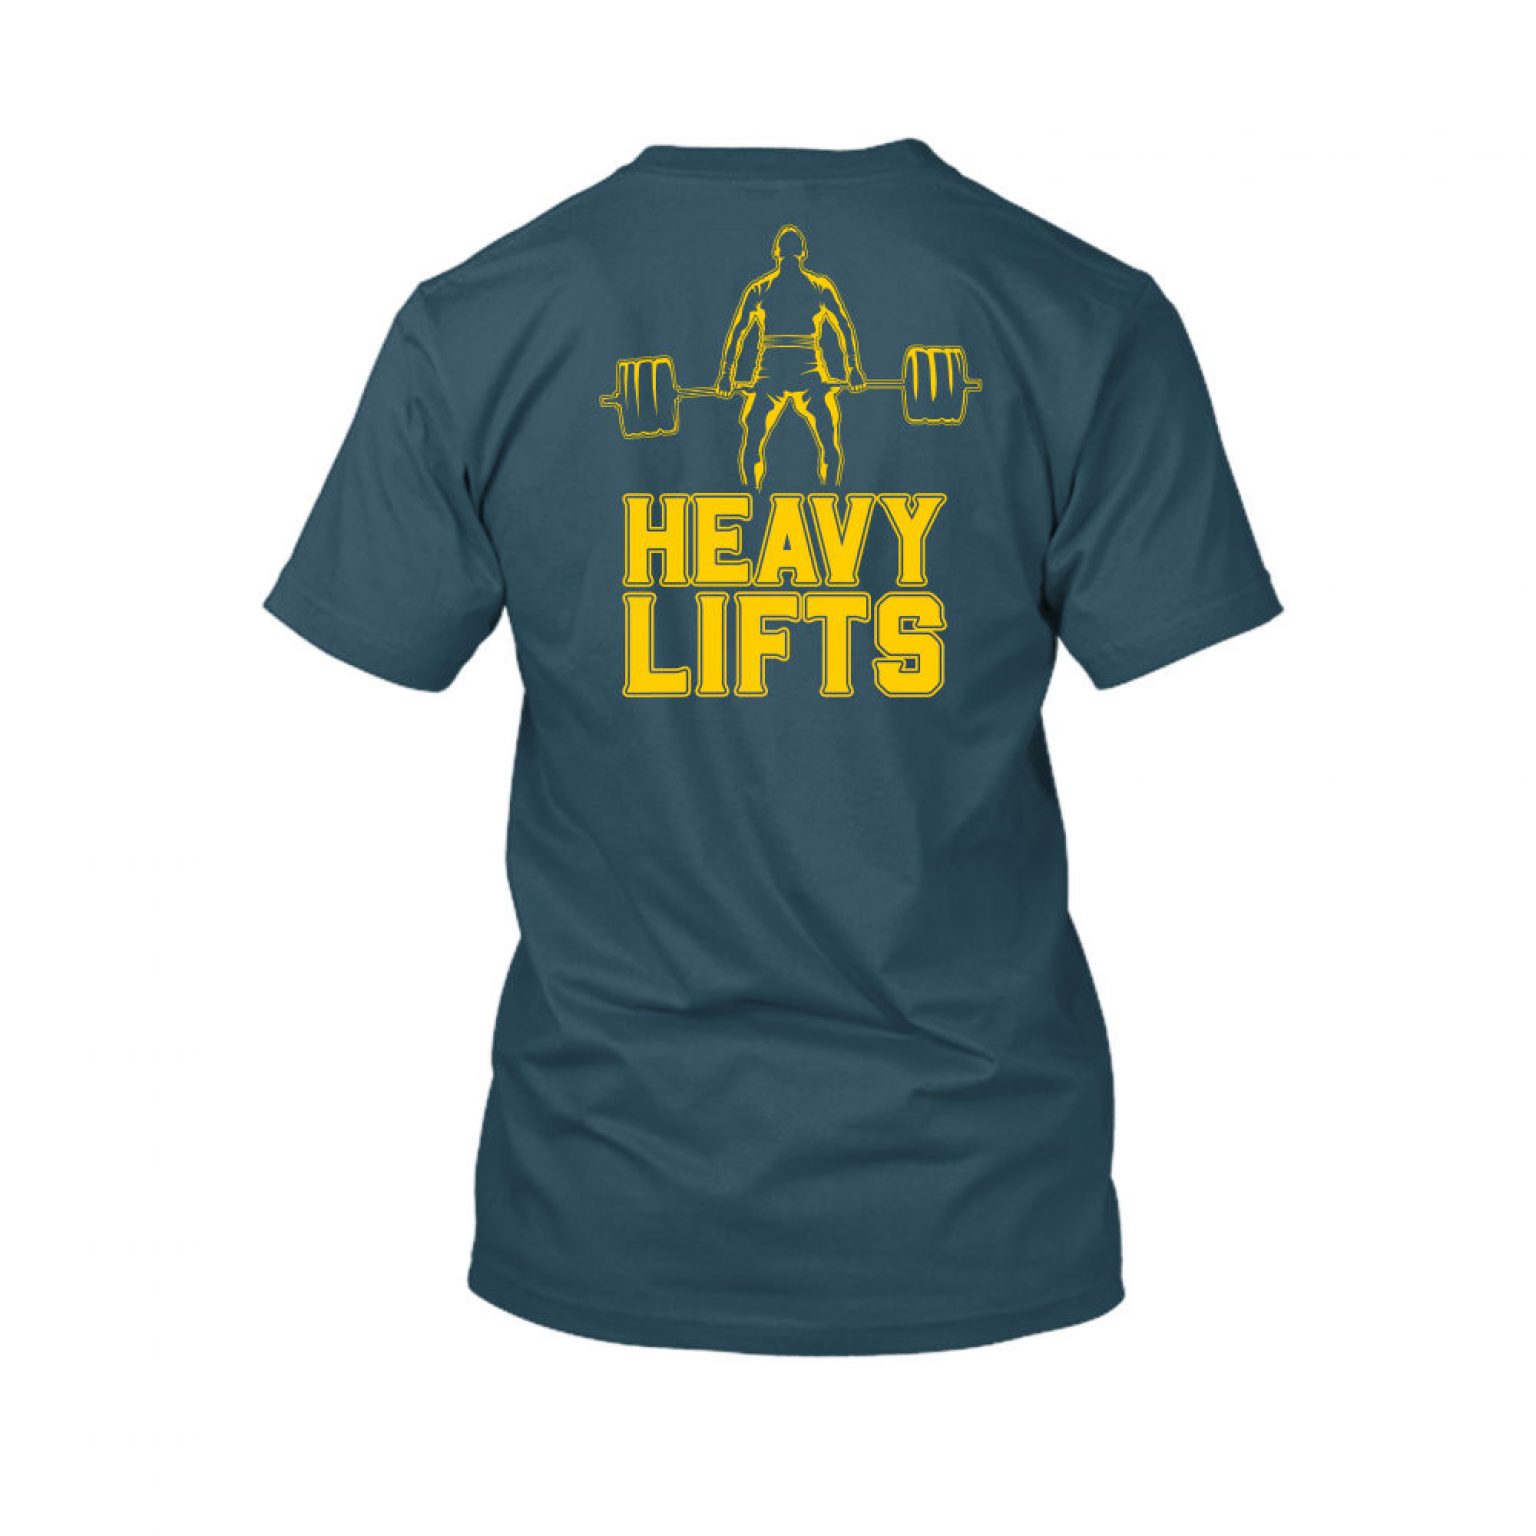 heavylifts shirt herren navy back